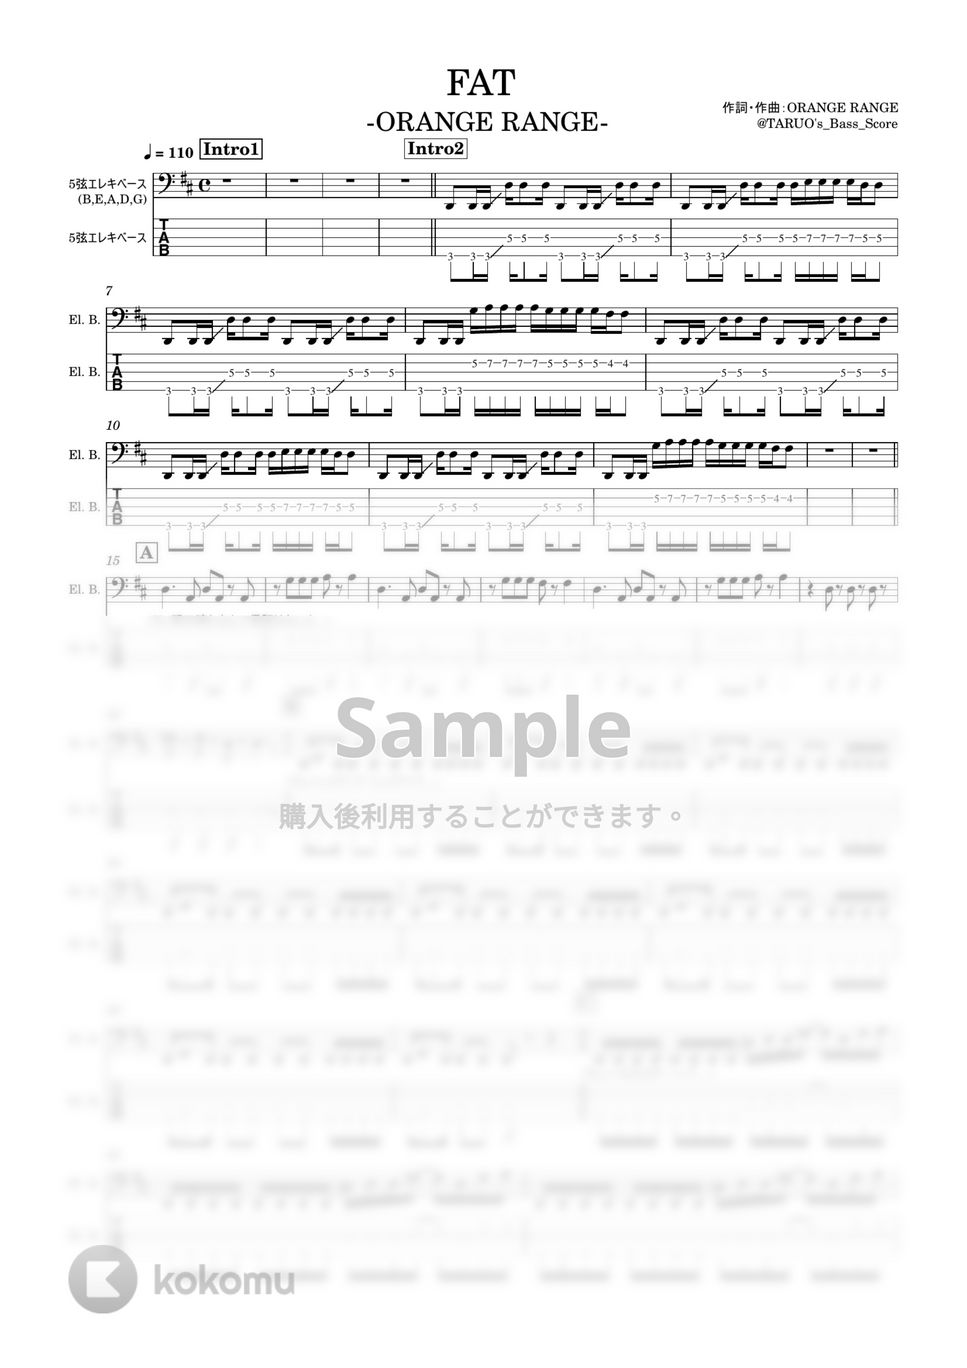 ORANGE RANGE - FAT(5弦) (ベース/TAB/ORANGE RANGE) by TARUO's_Bass_Score